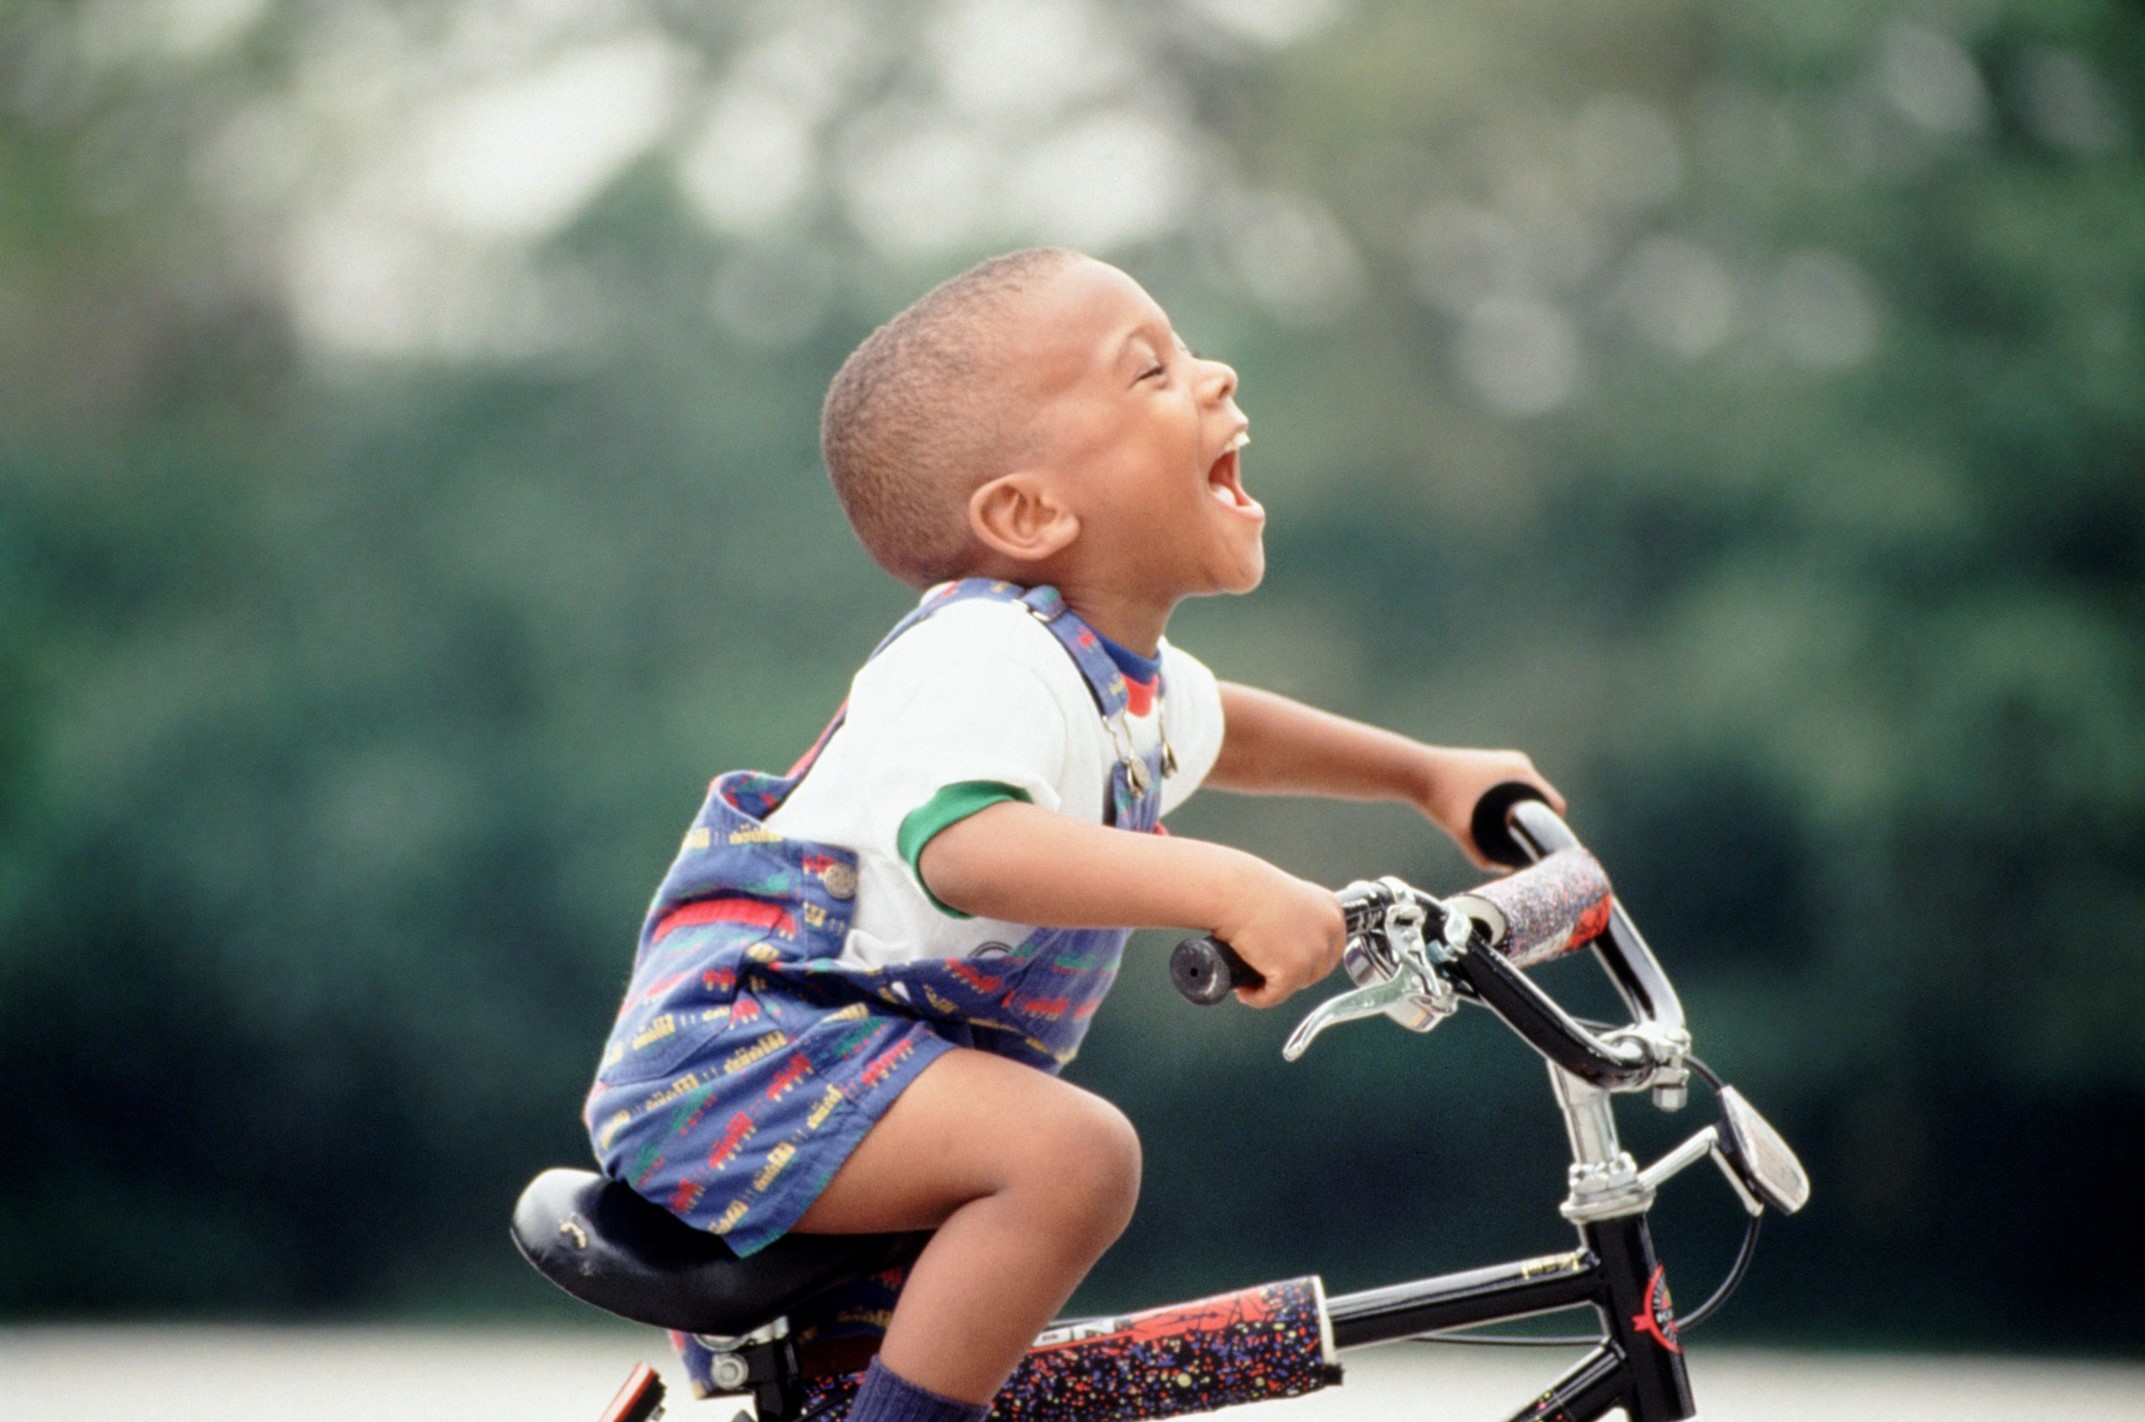 Child on a bike.